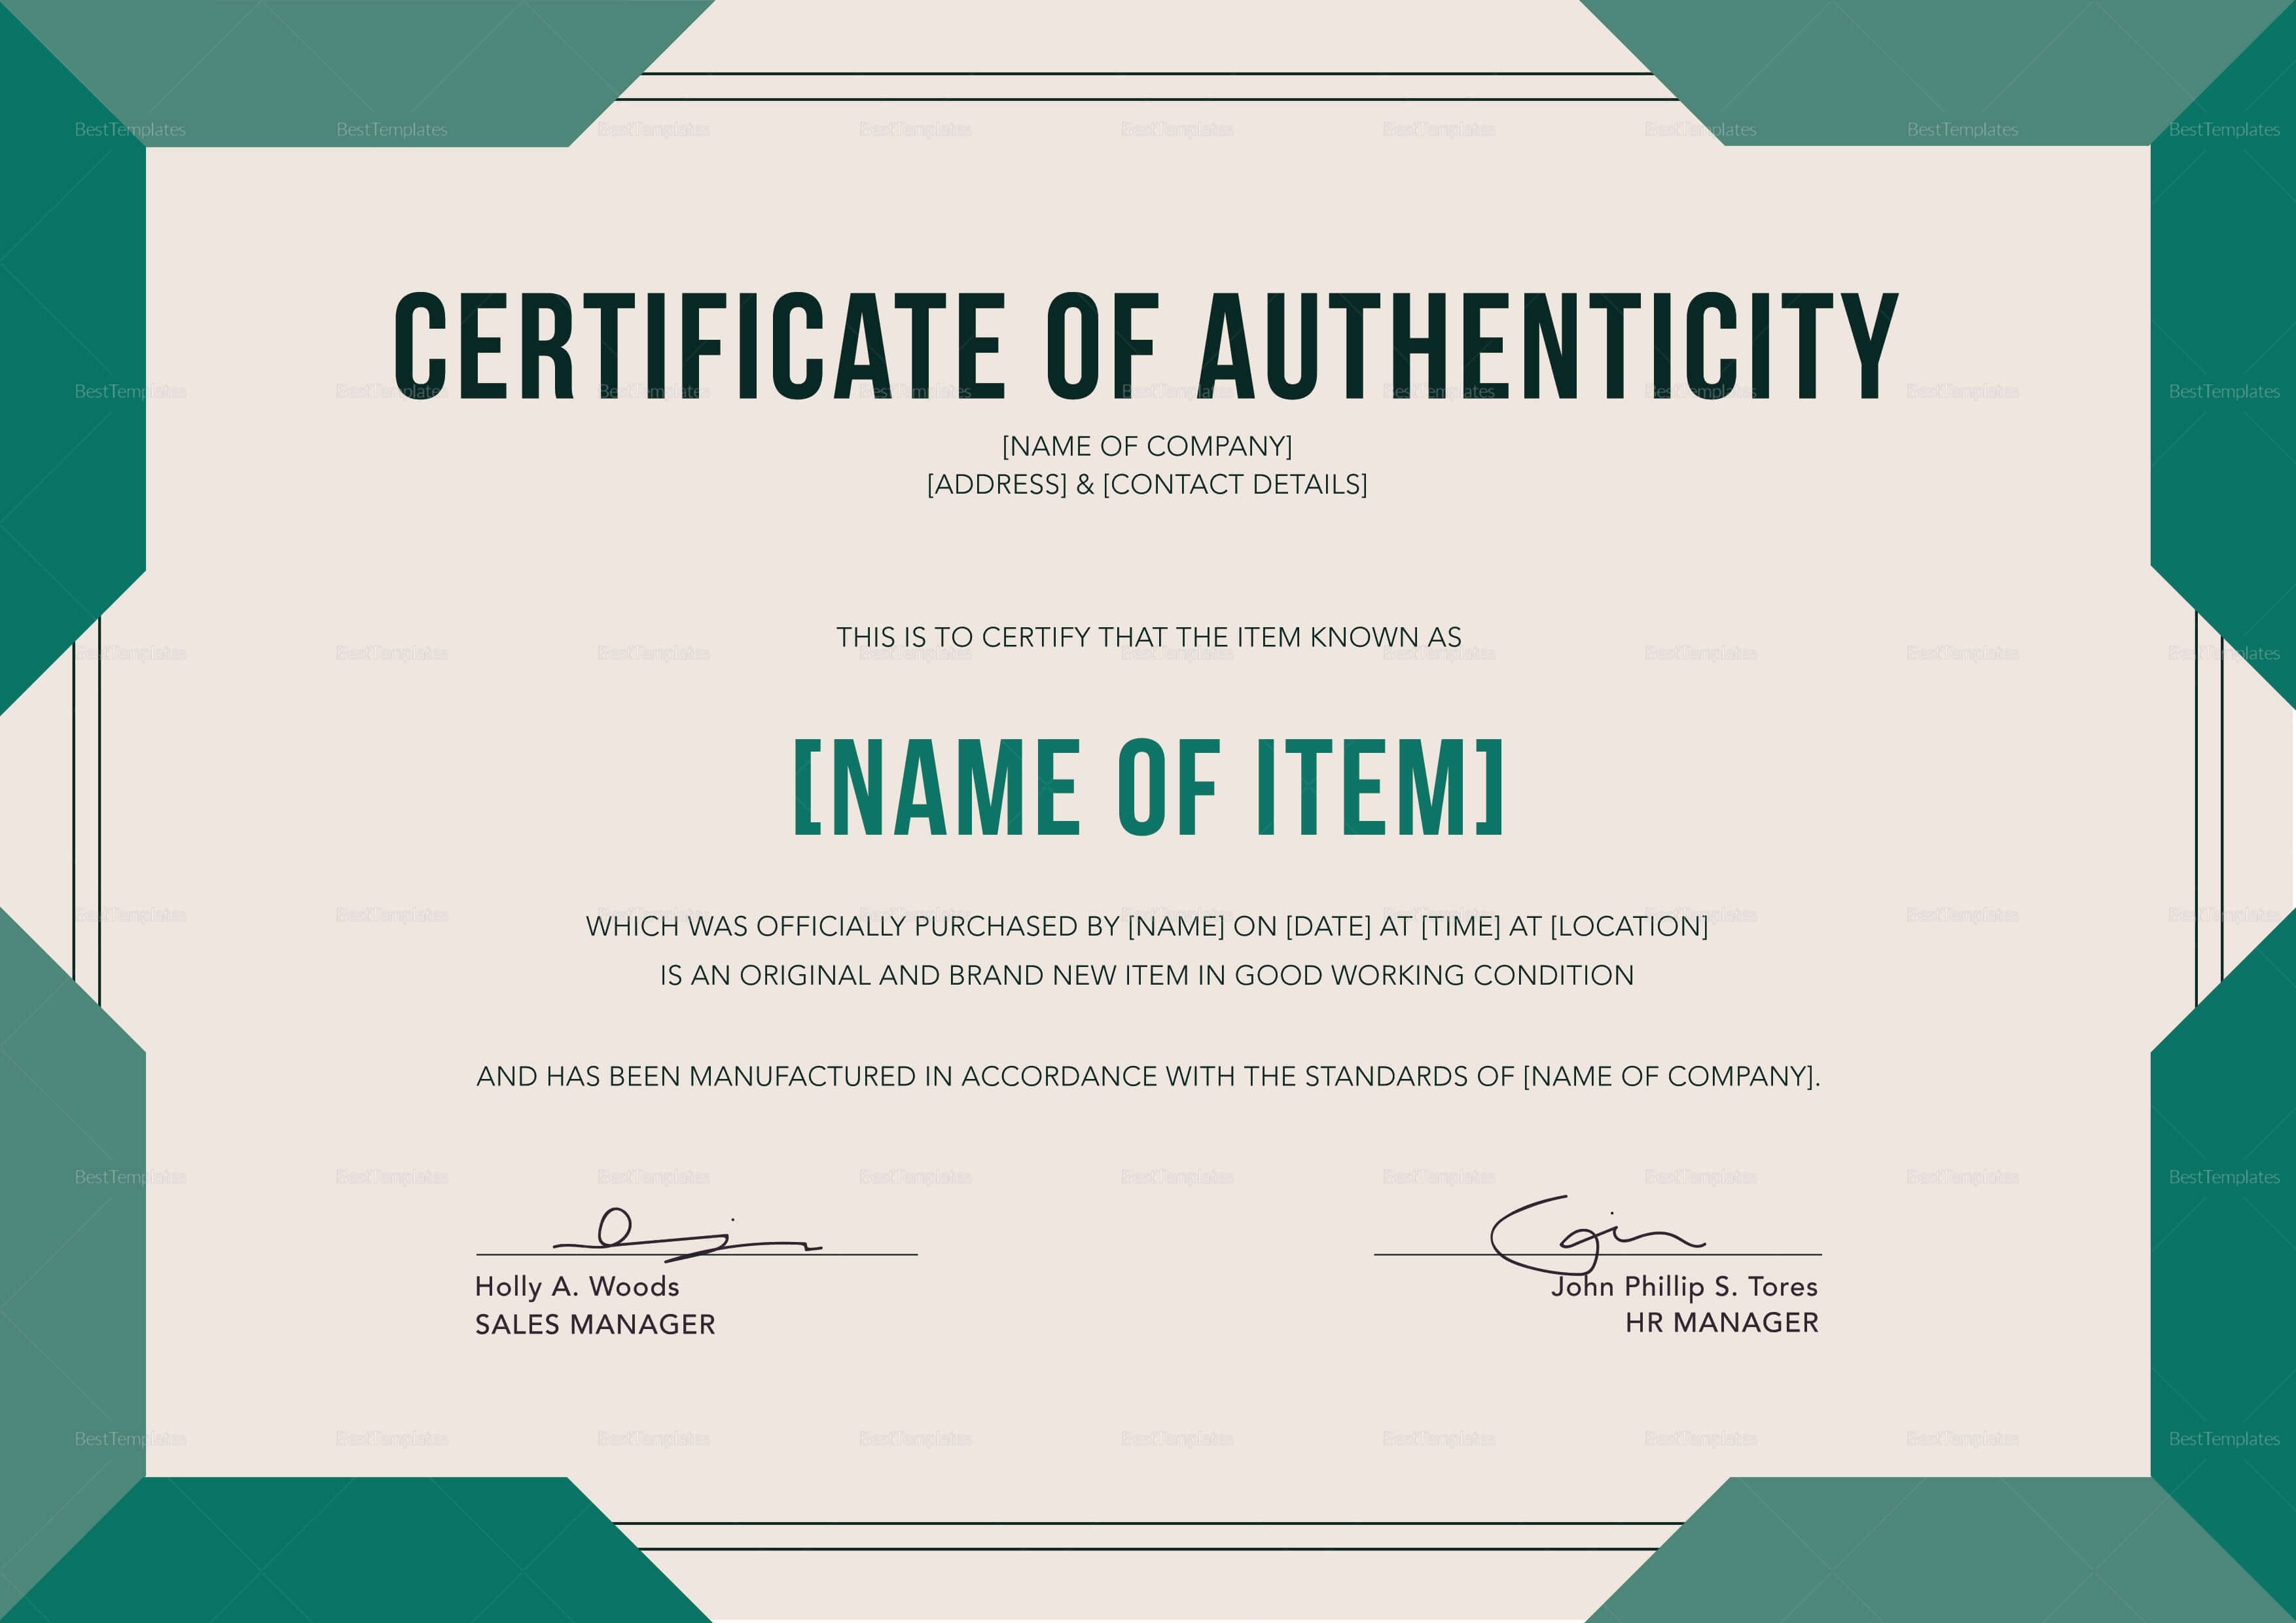 Elegant Certificate Of Authenticity Template Throughout Certificate Of Authenticity Template